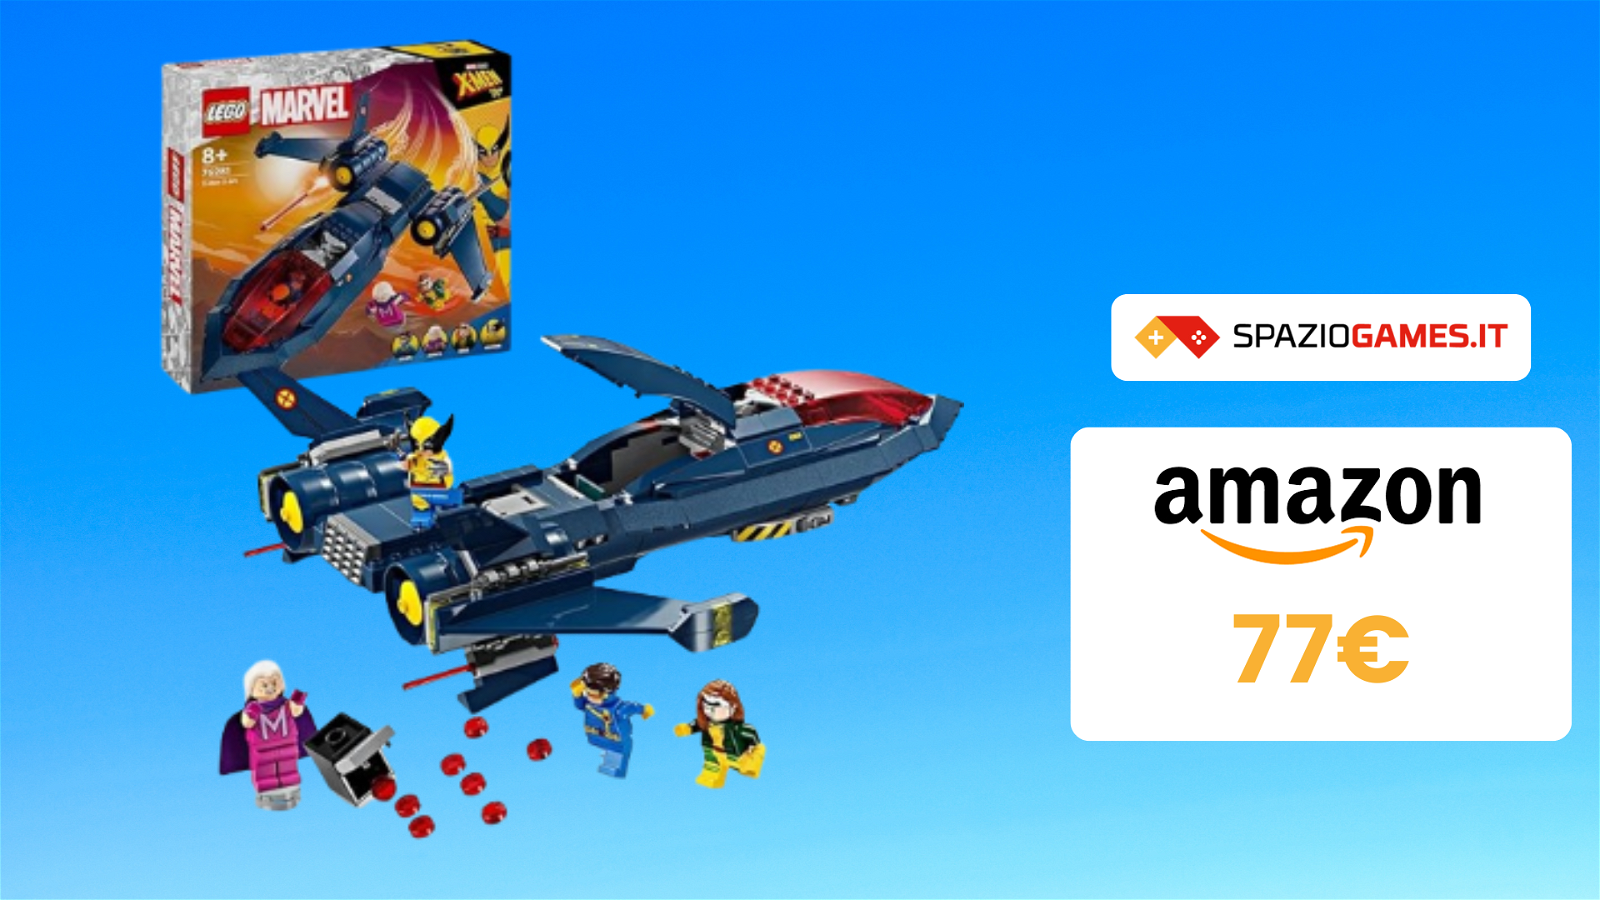 STUPENDO X-Jet LEGO Marvel a SOLI 77€!